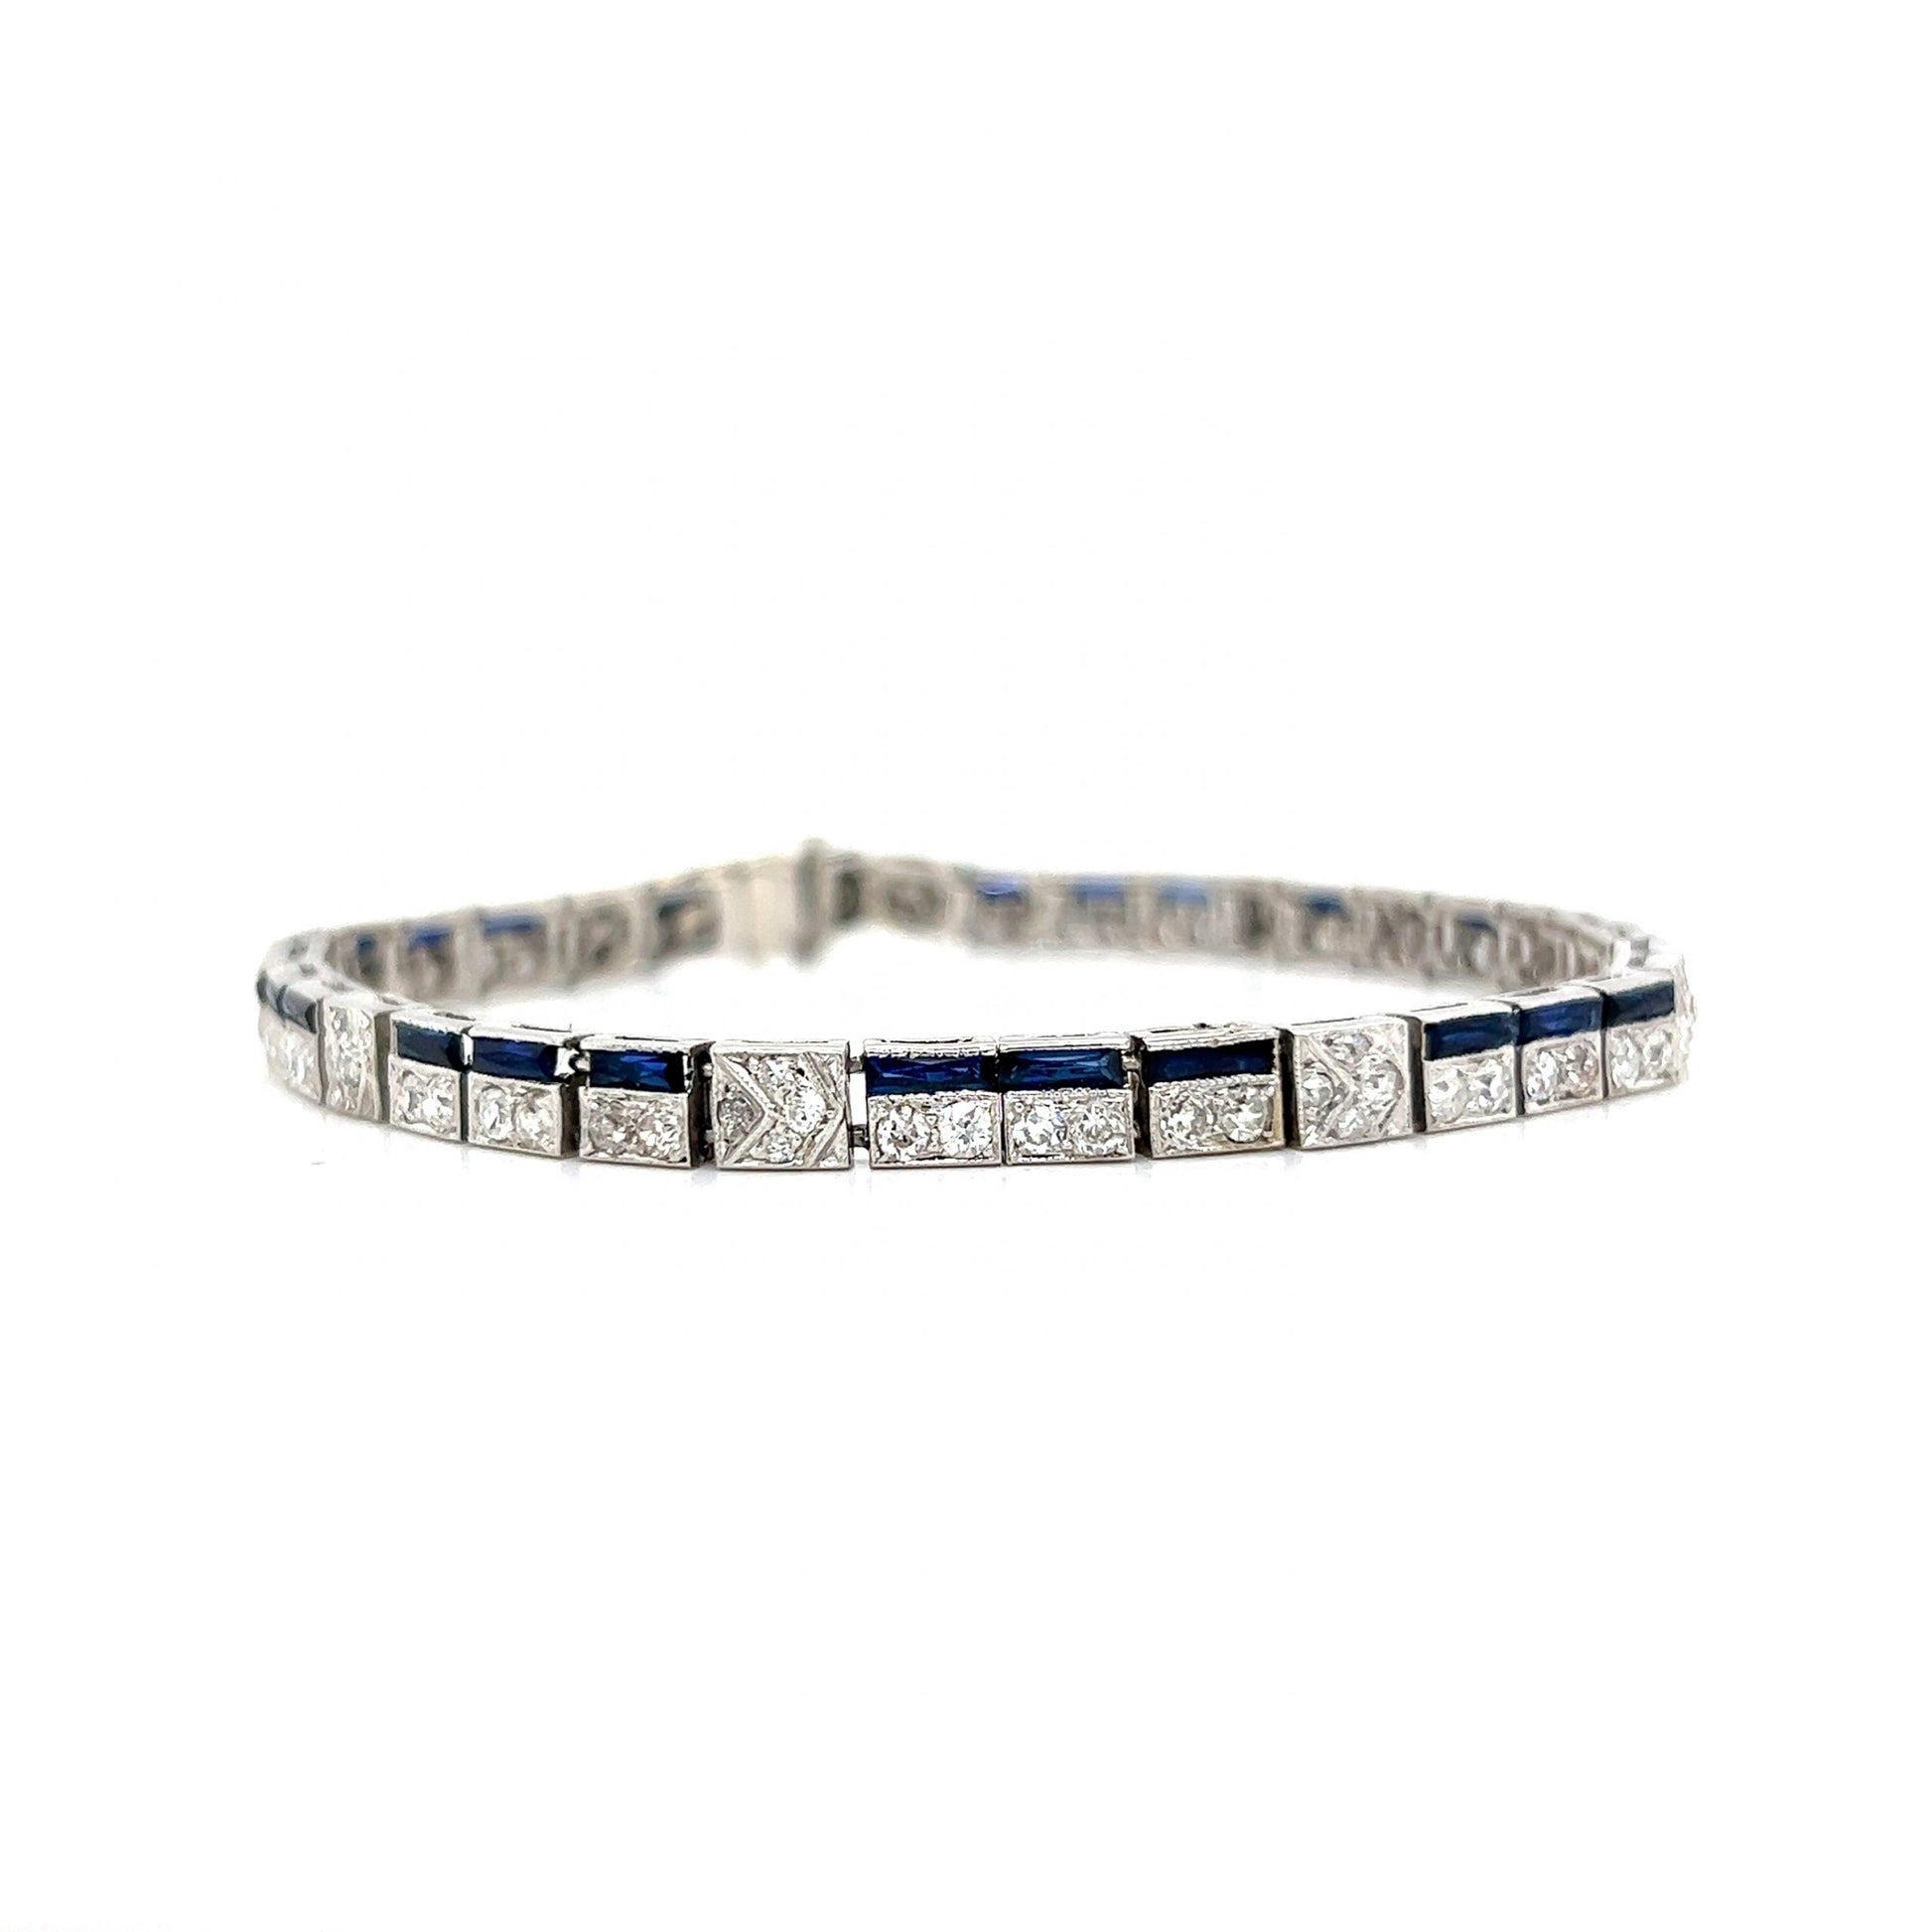 Antique Diamond & Sapphire Link Bracelet in PlatinumComposition: PlatinumTotal Diamond Weight: 2.34 ctTotal Gram Weight: 19.5 g